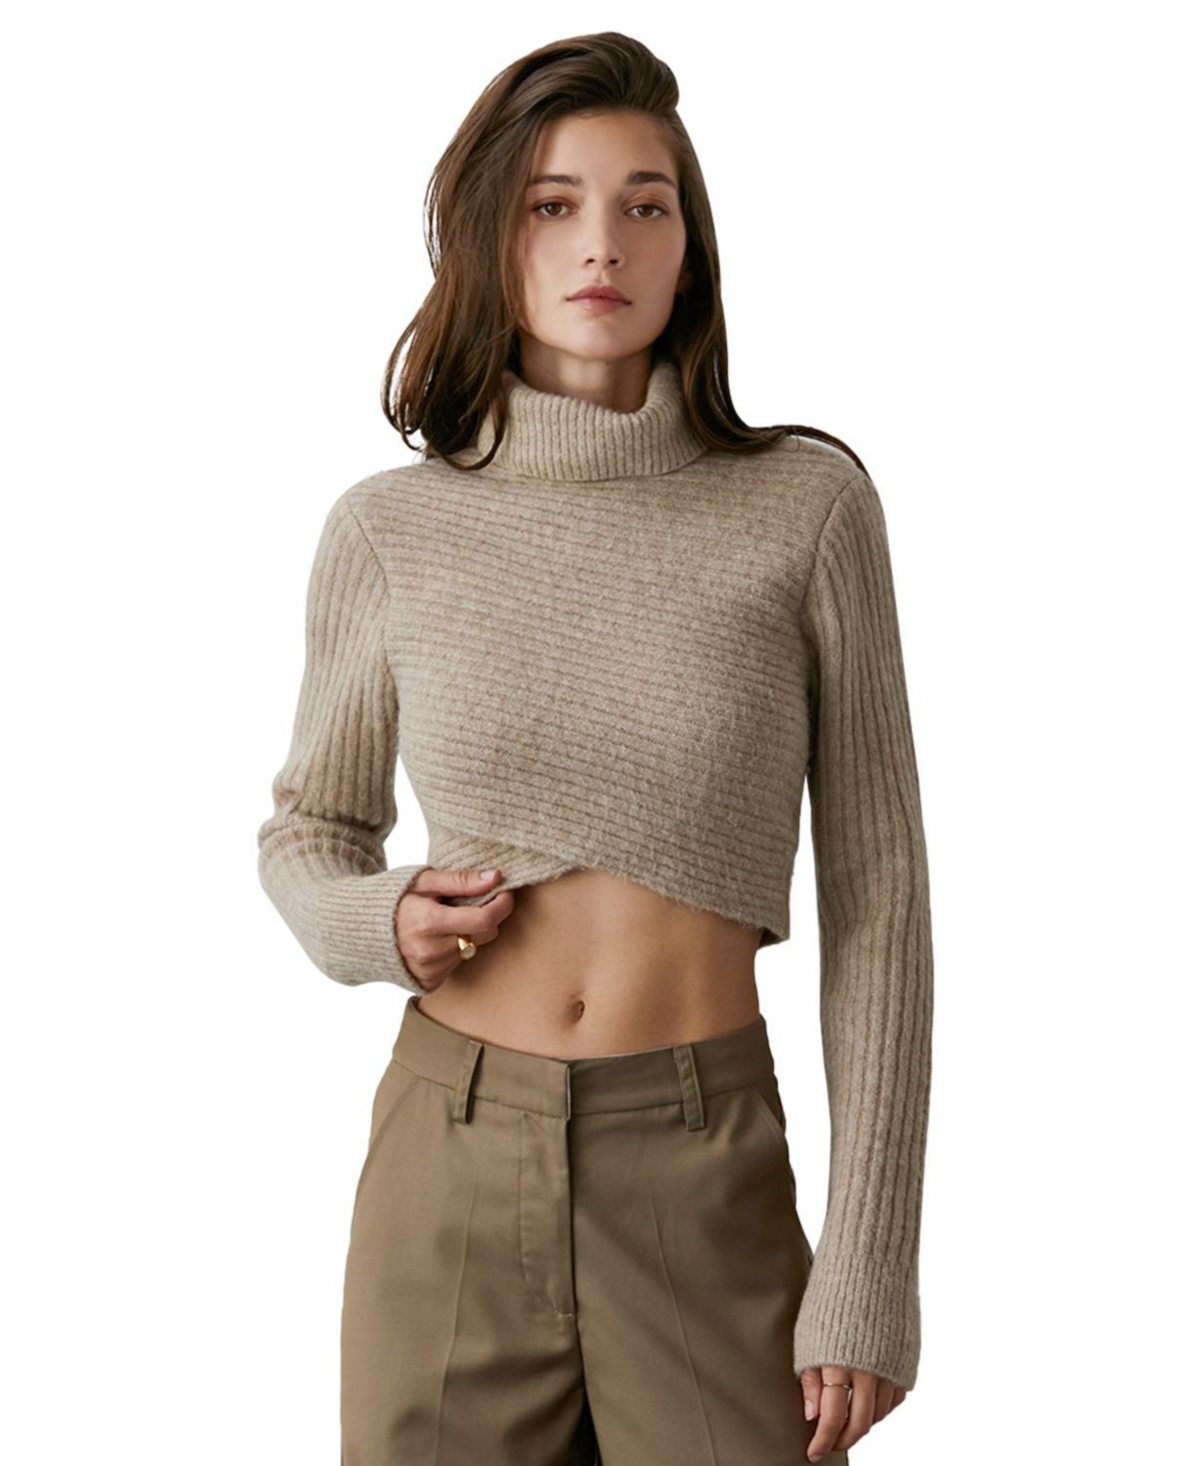 Women's Emery Criss-Cross Crop Sweater - Open brown + taupe